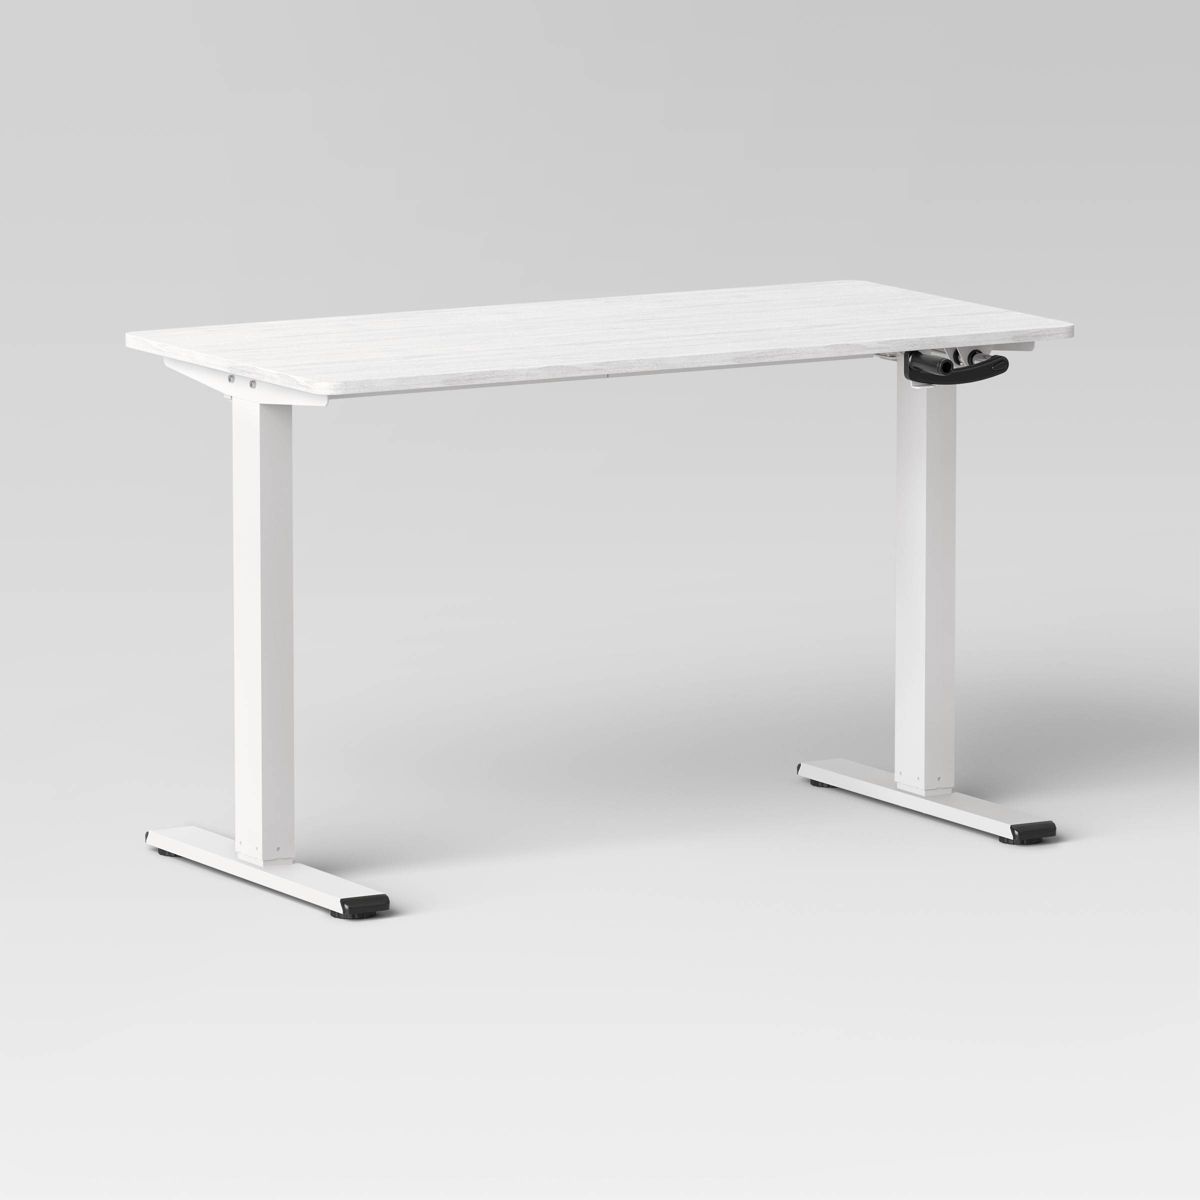 Loring Manual Height Adjustable Standing Desk White - Threshold™ | Target